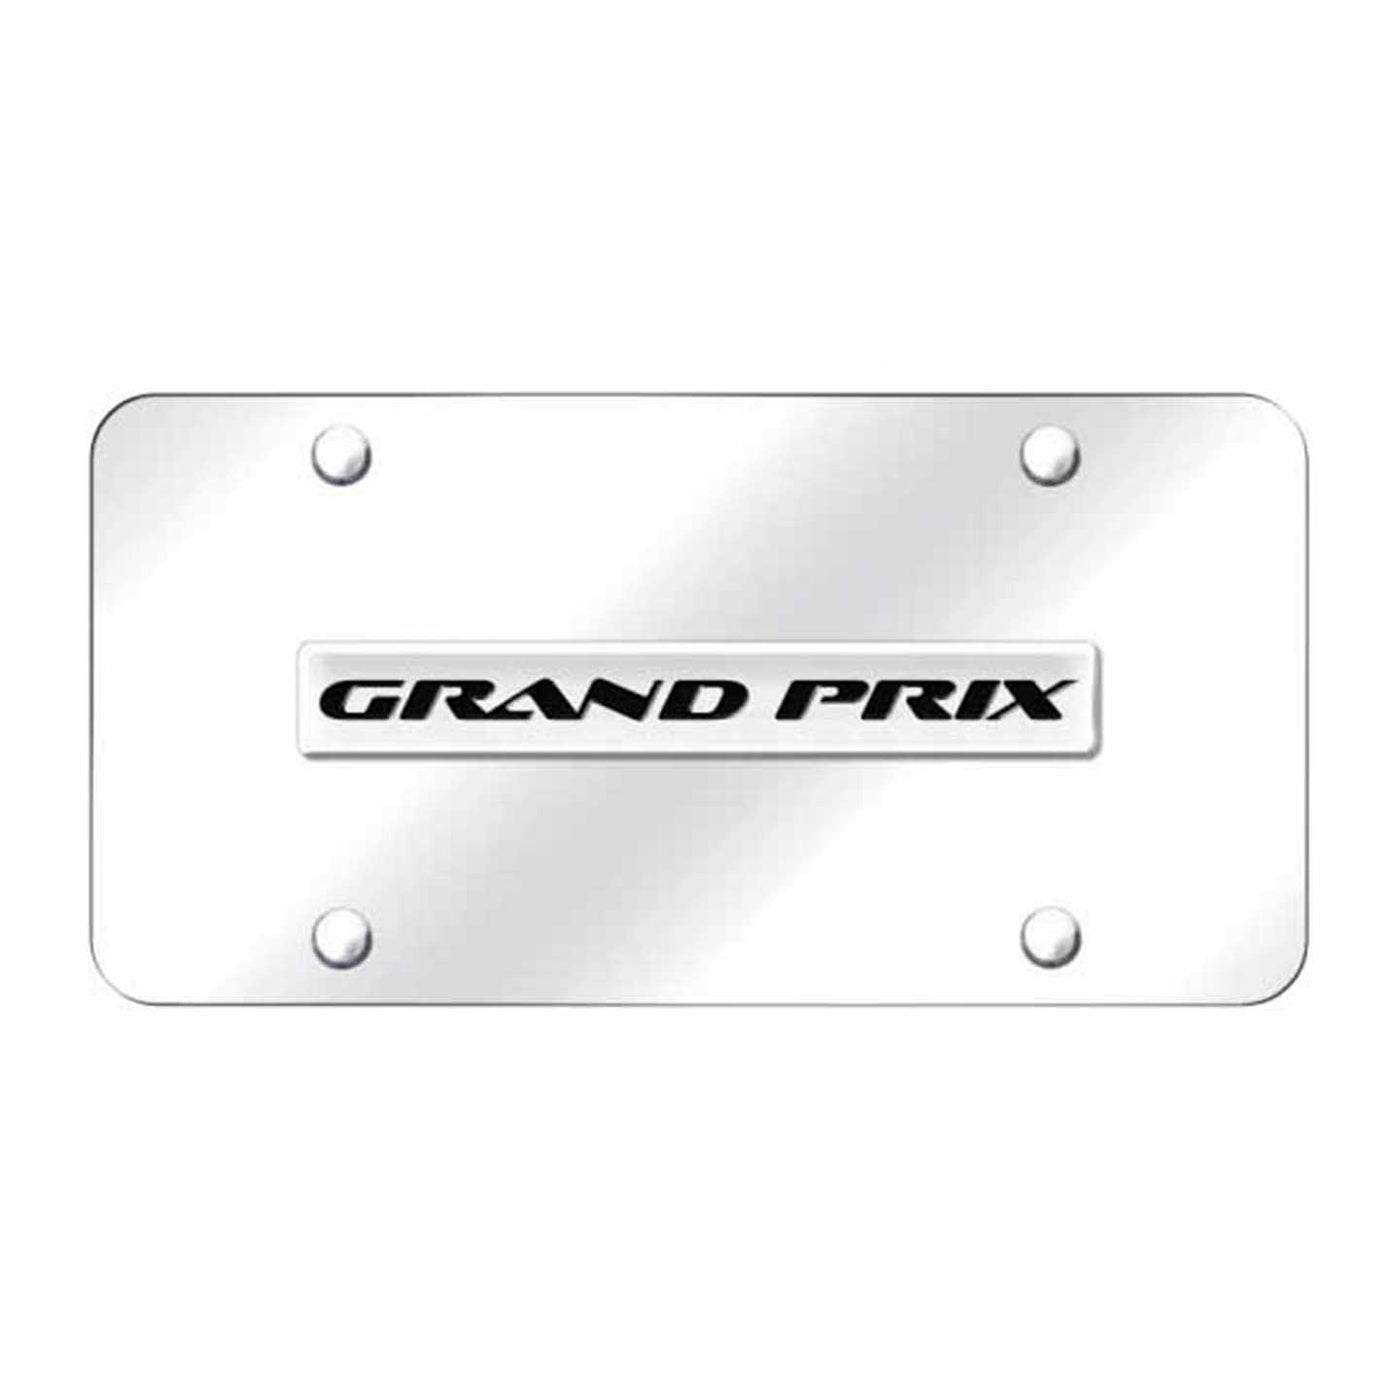 Grand Prix Name License Plate - Chrome on Mirrored